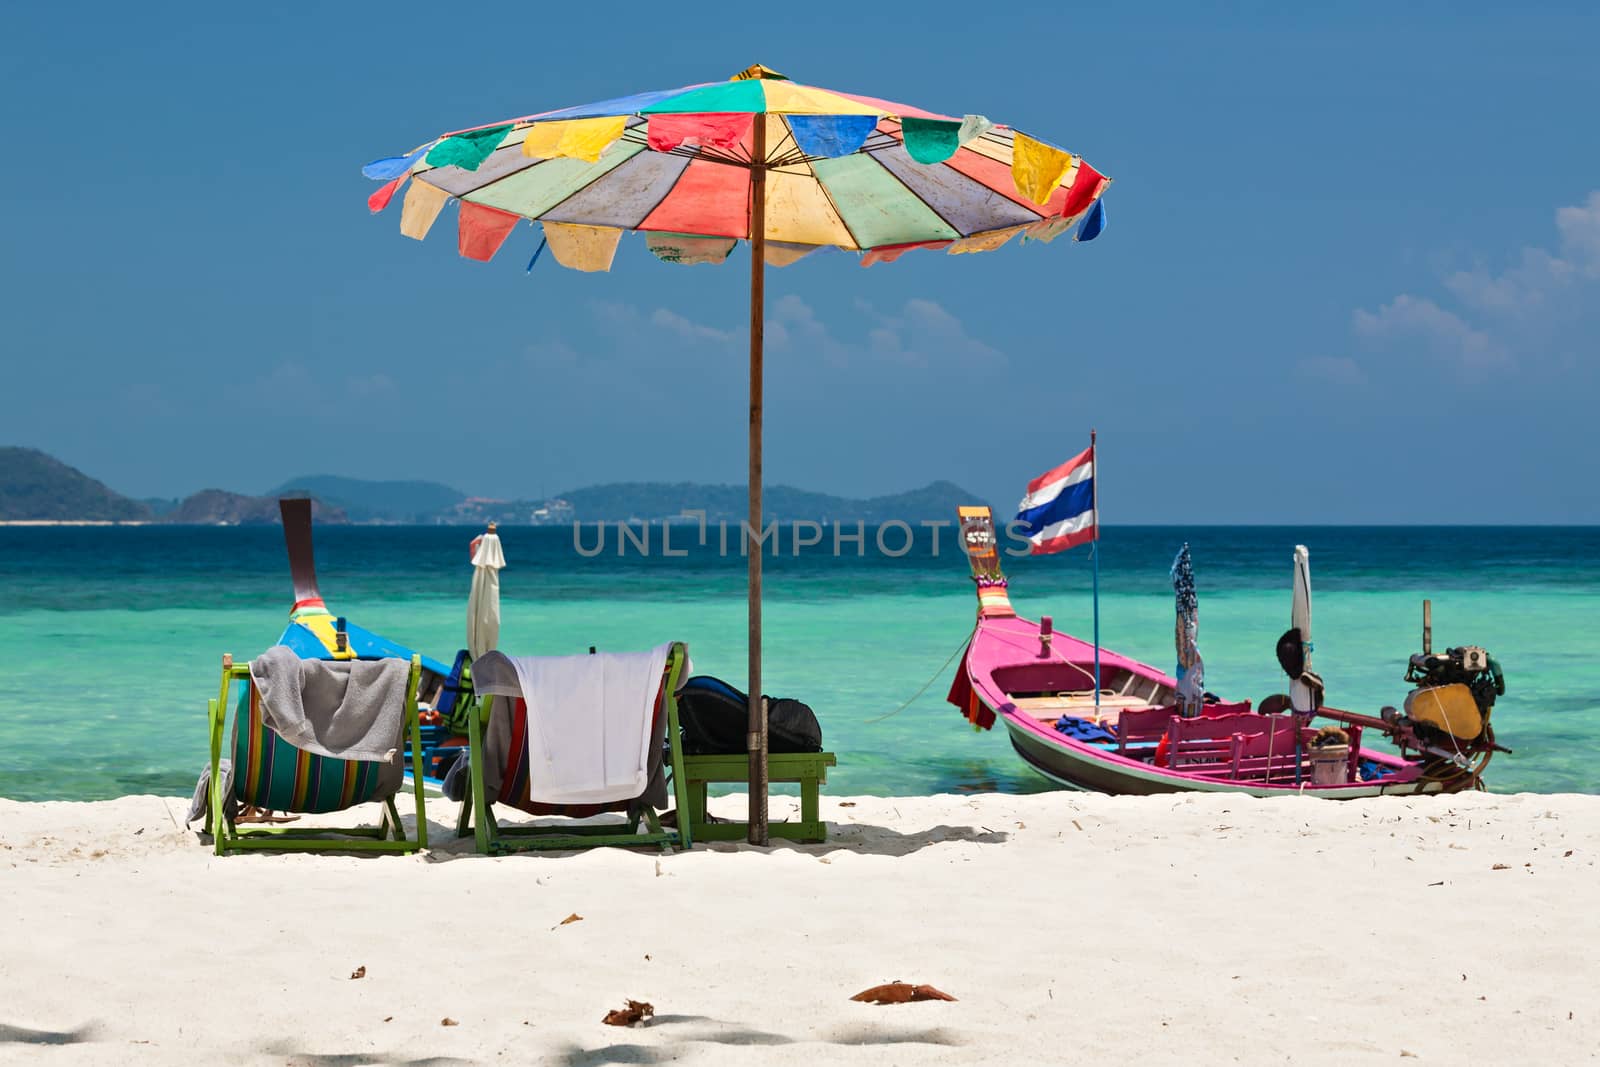 Beach umbrella and chairs in Coral island, Thailand by LuigiMorbidelli